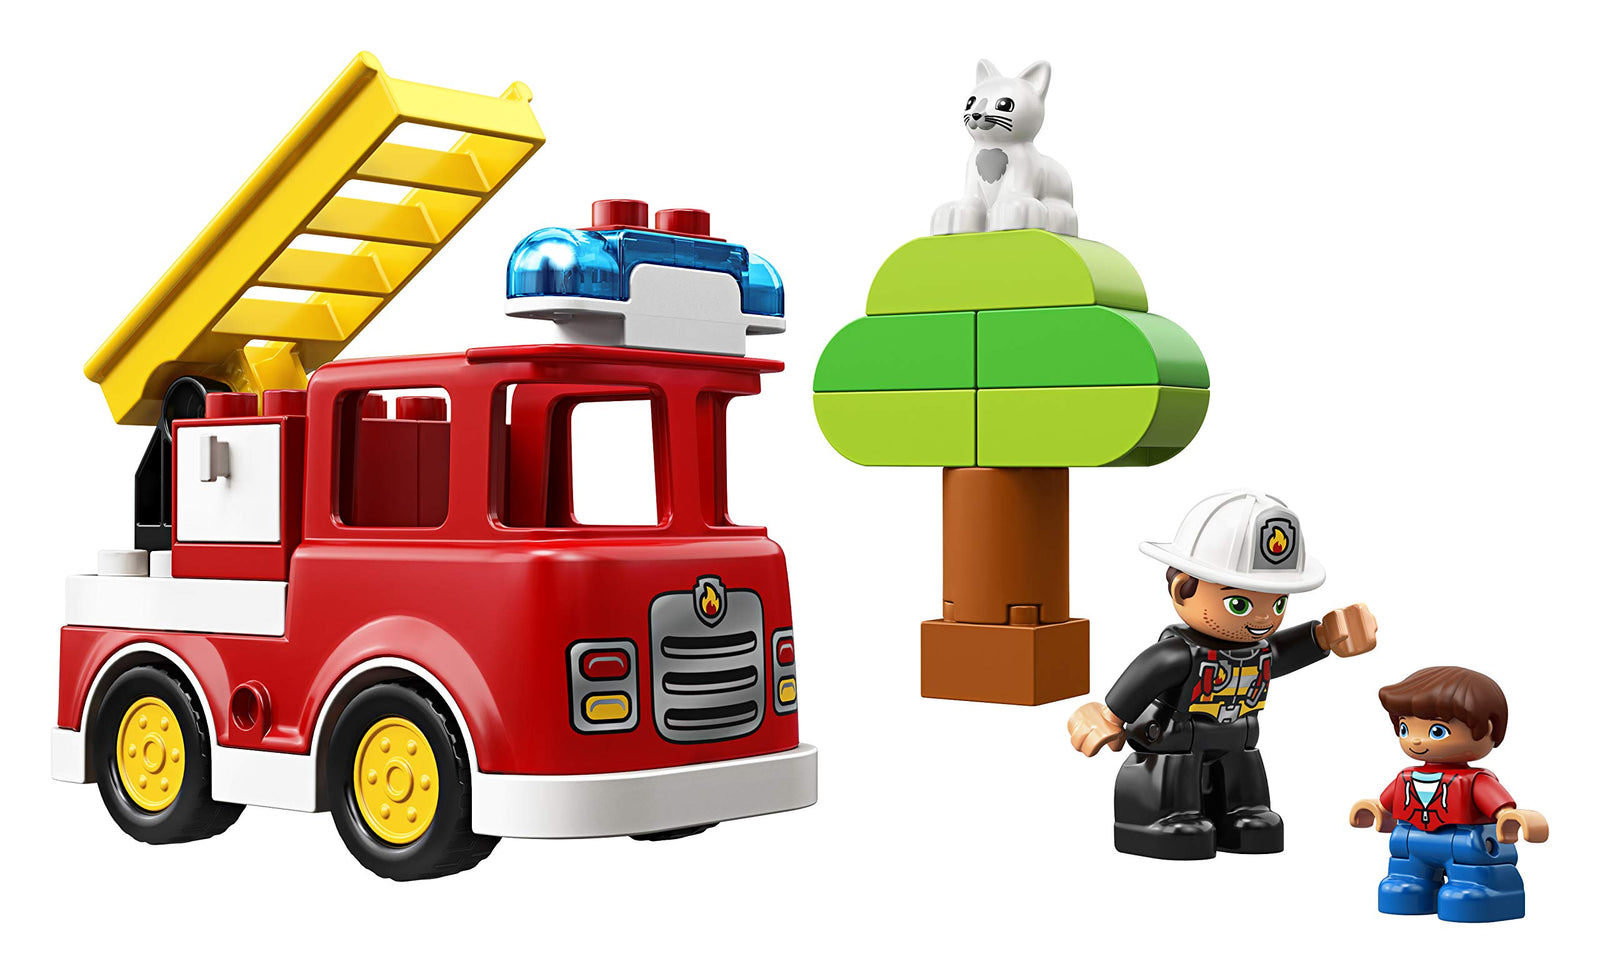 LEGO DUPLO Town Fire Truck 10901 Building Blocks (21 Pieces)